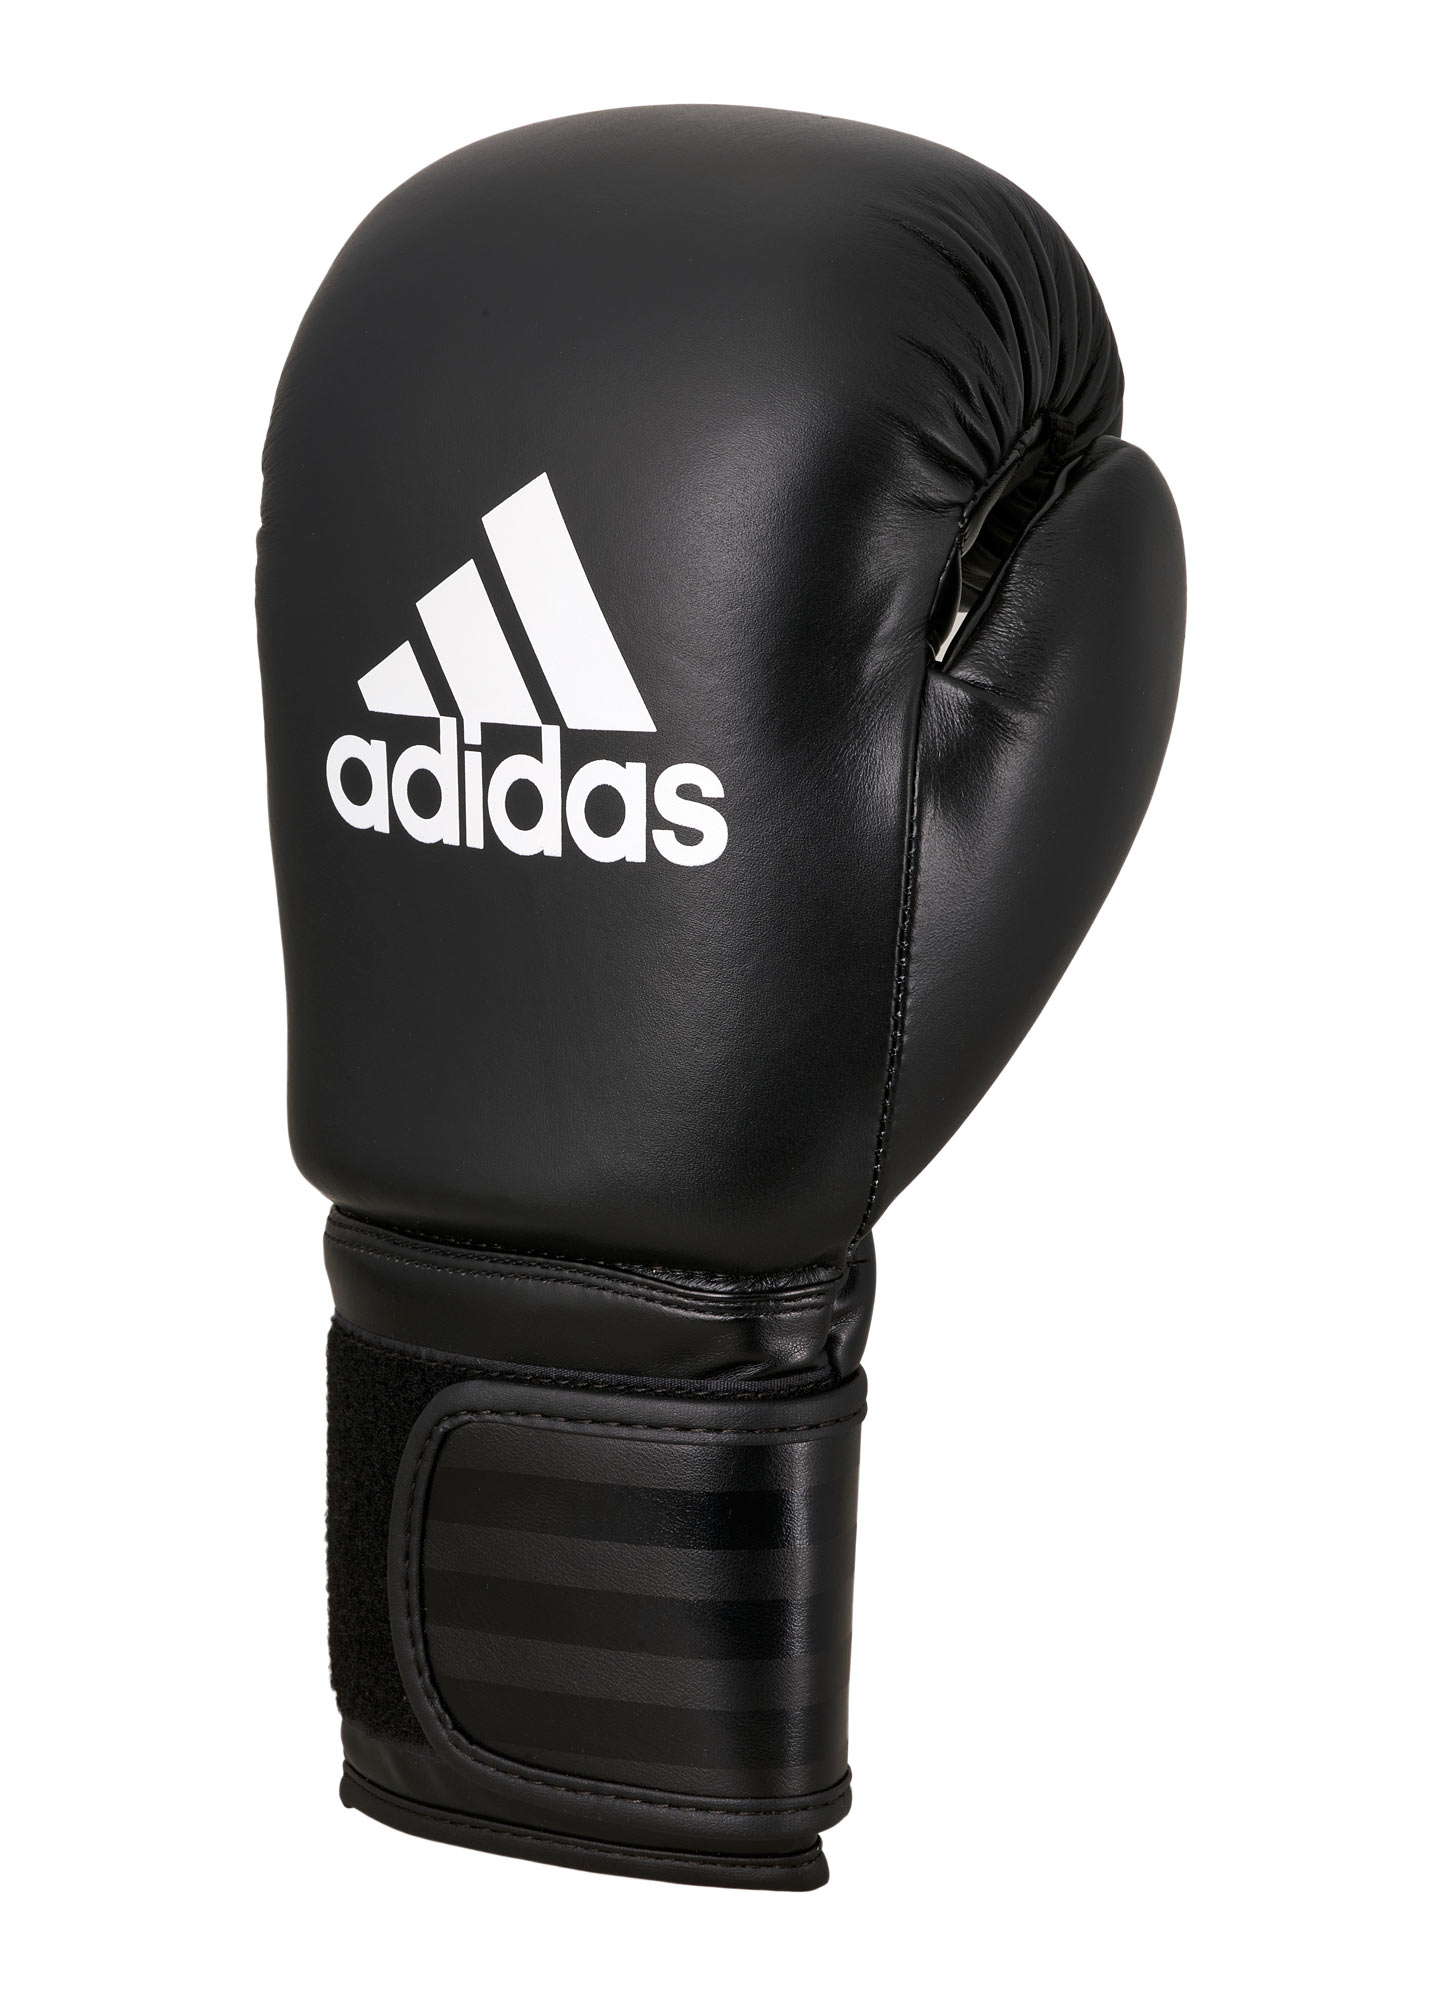 Adidas Boxhandschuhe Performer schwarz | KAMPFHELDEN ADIBC01